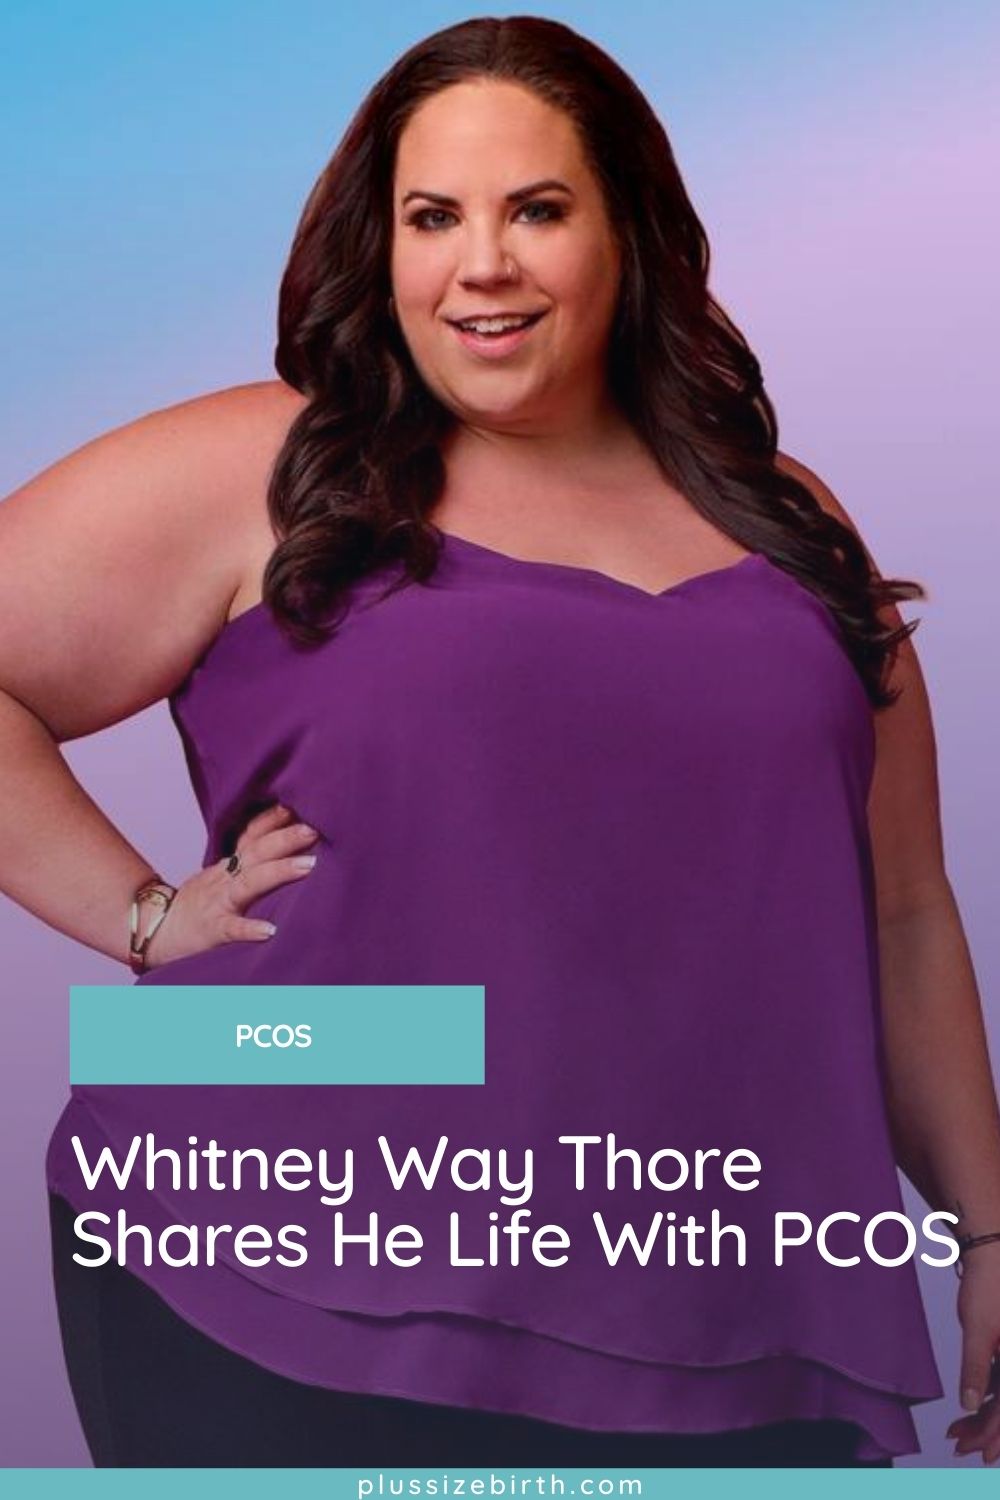 Whitney thore 2017 en español